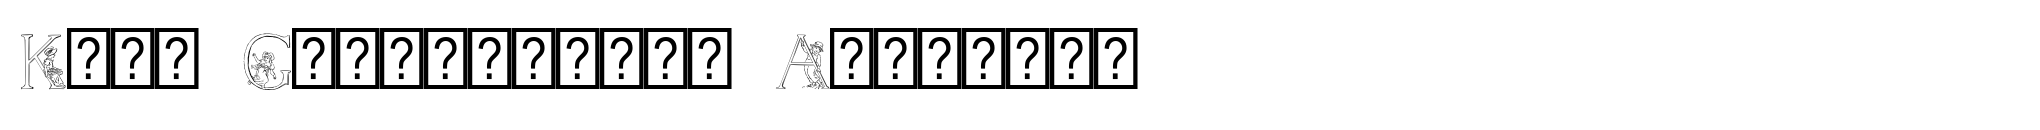 Kate Greenaway's Alphabet image